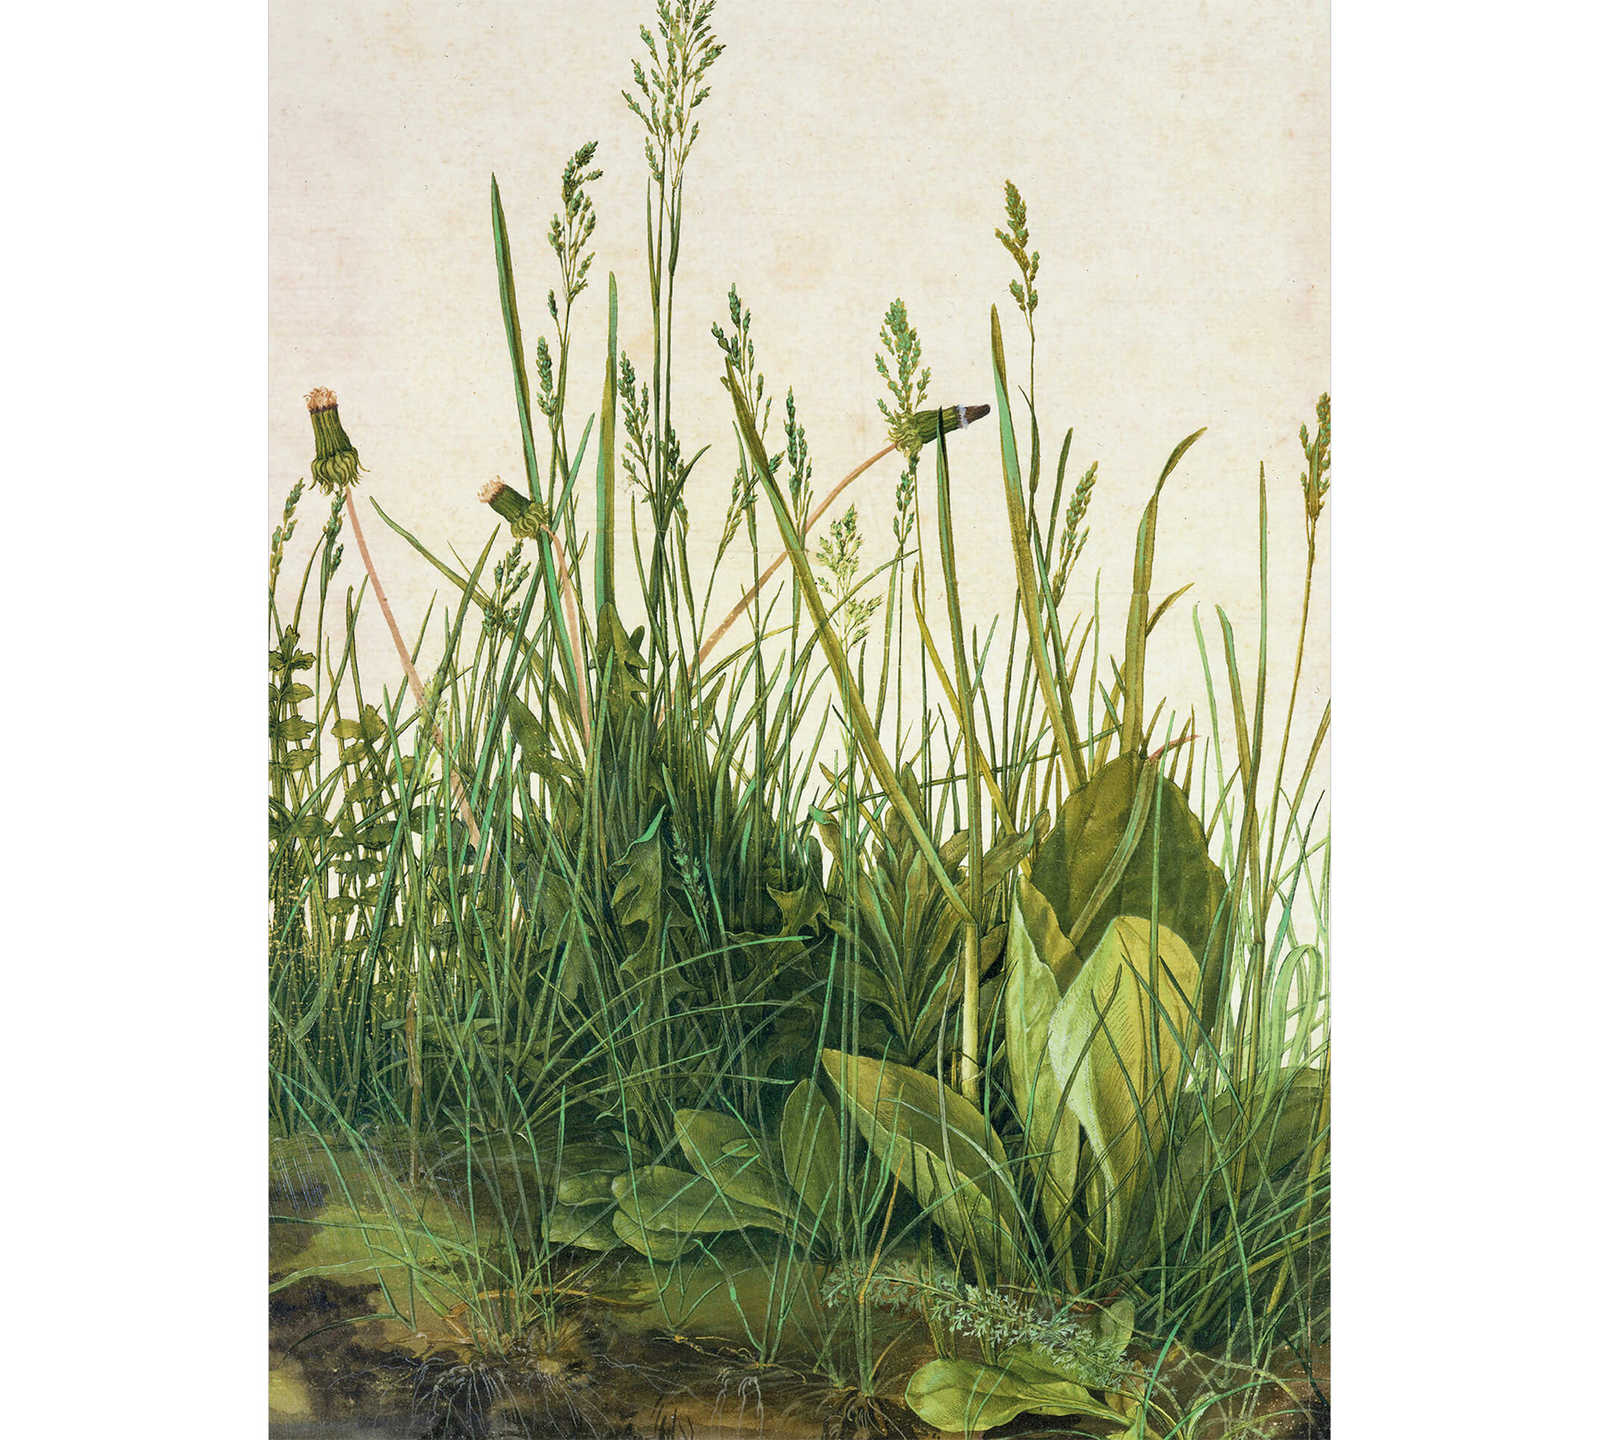         Photo wallpaper narrow blades of grass & dandelion
    